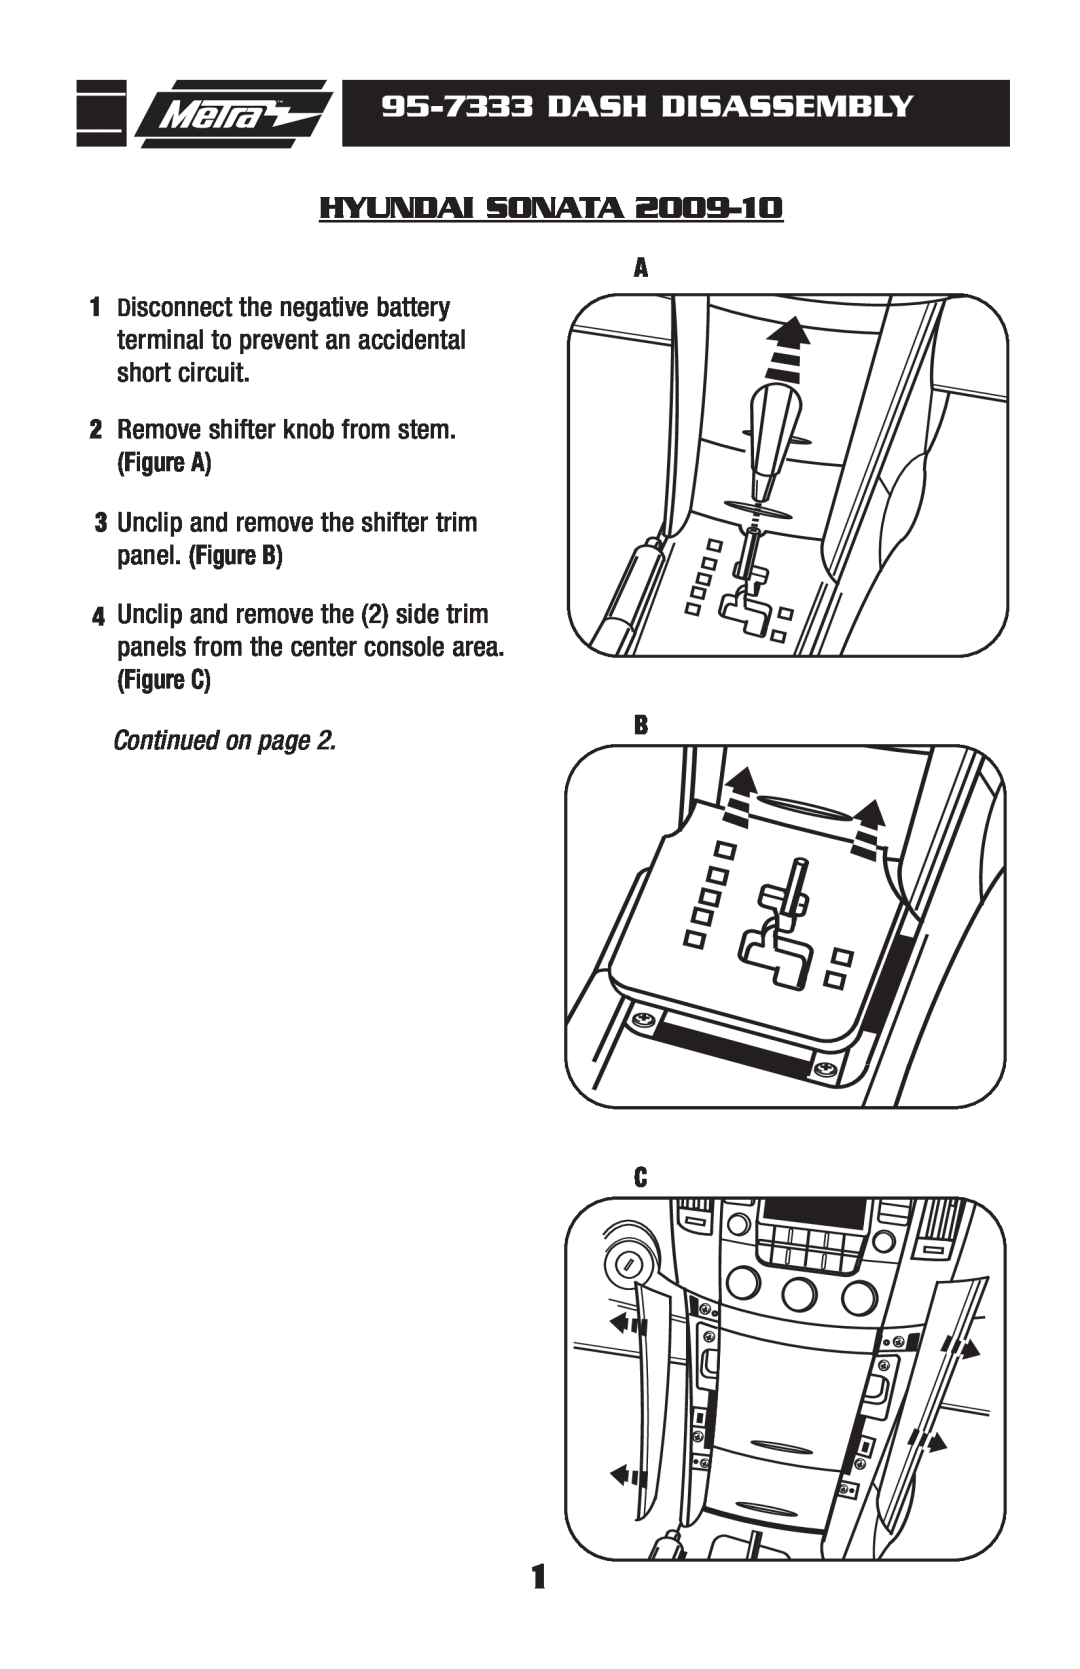 Hyundai 95-7333 installation instructions Dash Disassembly, Hyundai Sonata, Figure A, Figure C, Continued on page 